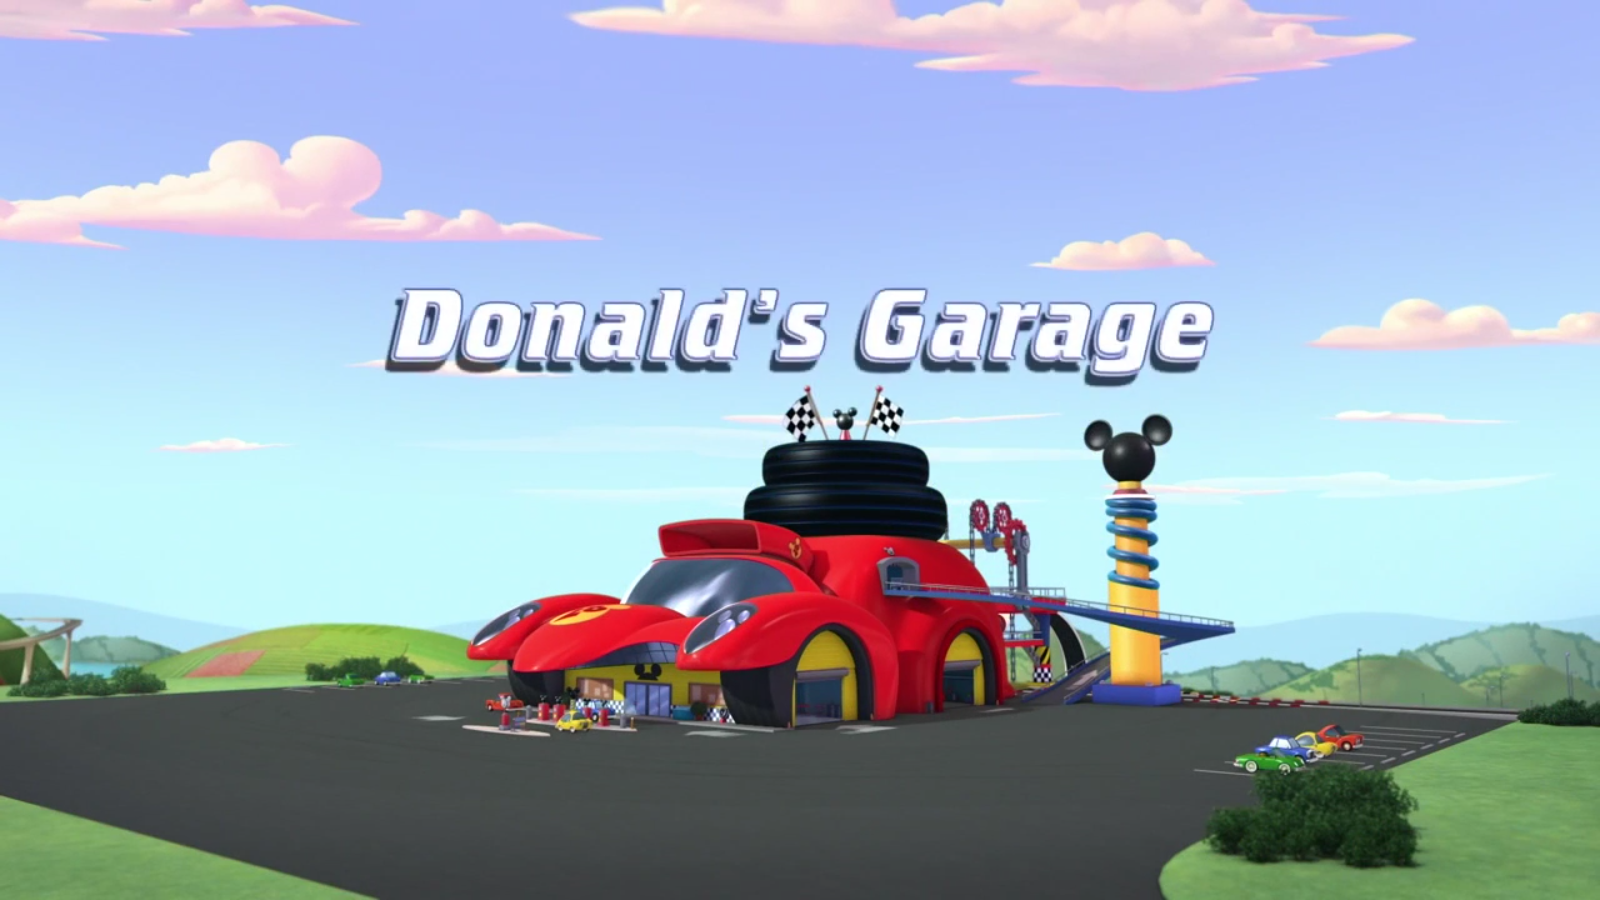 Donald's Garage